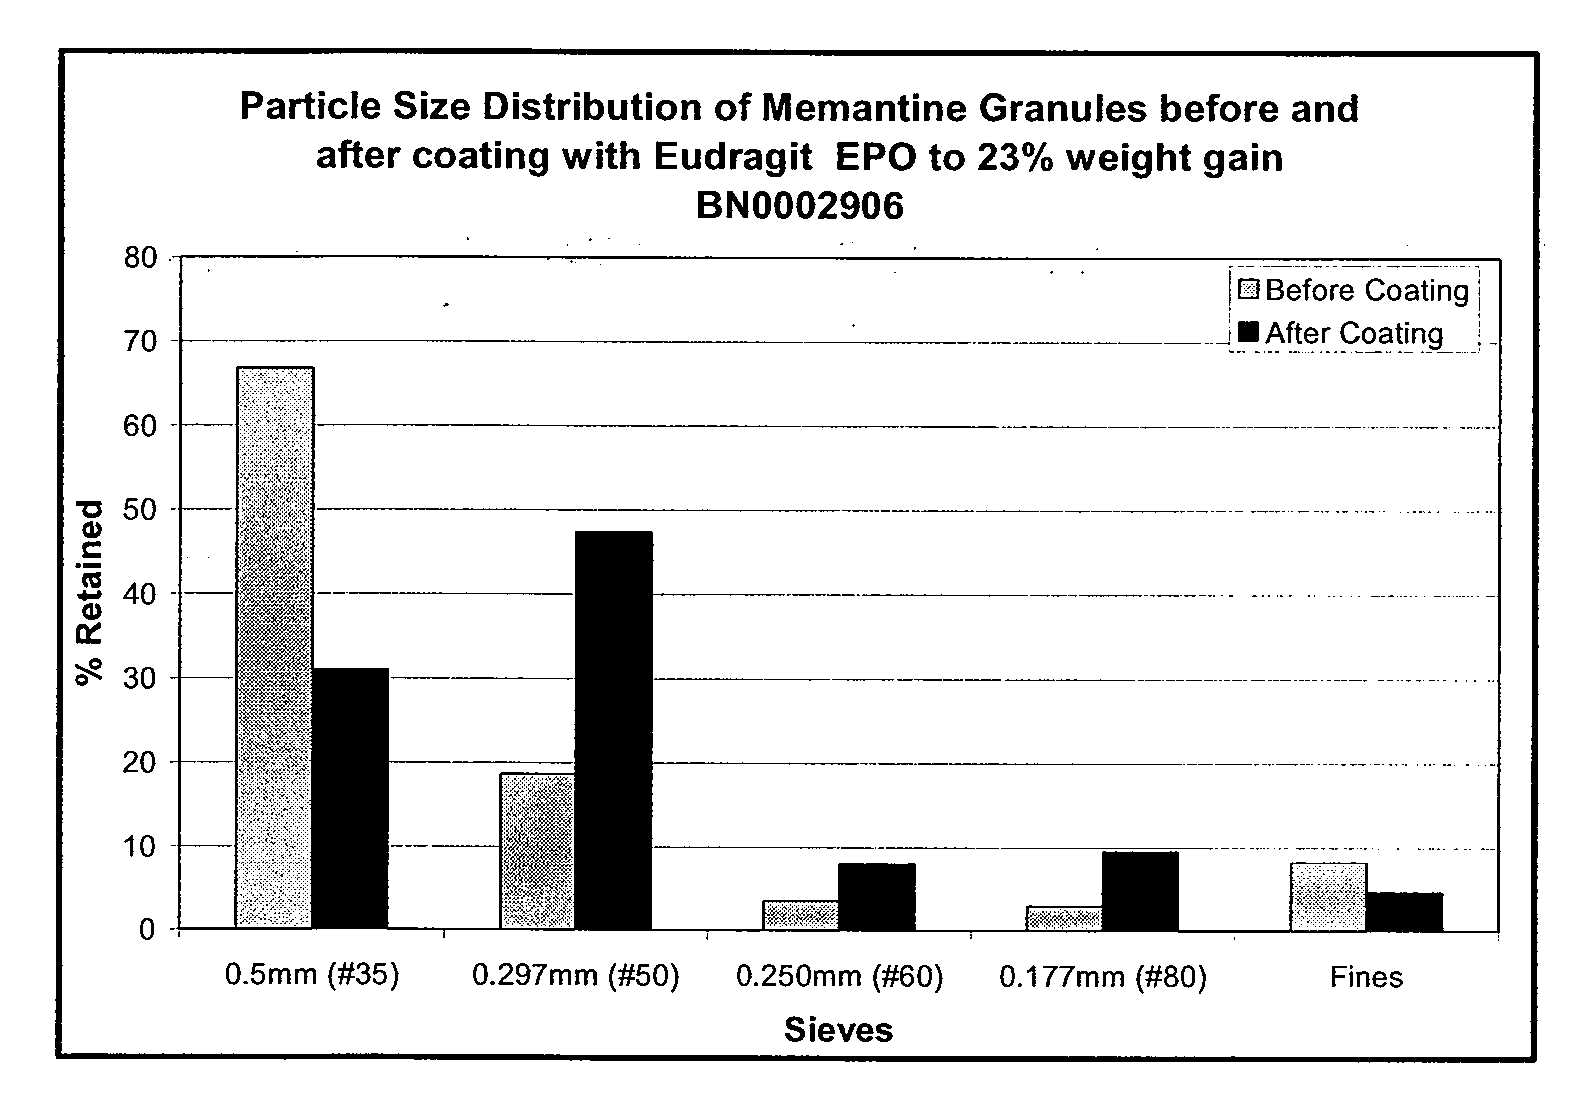 Orally Dissolving Formulations of Memantine